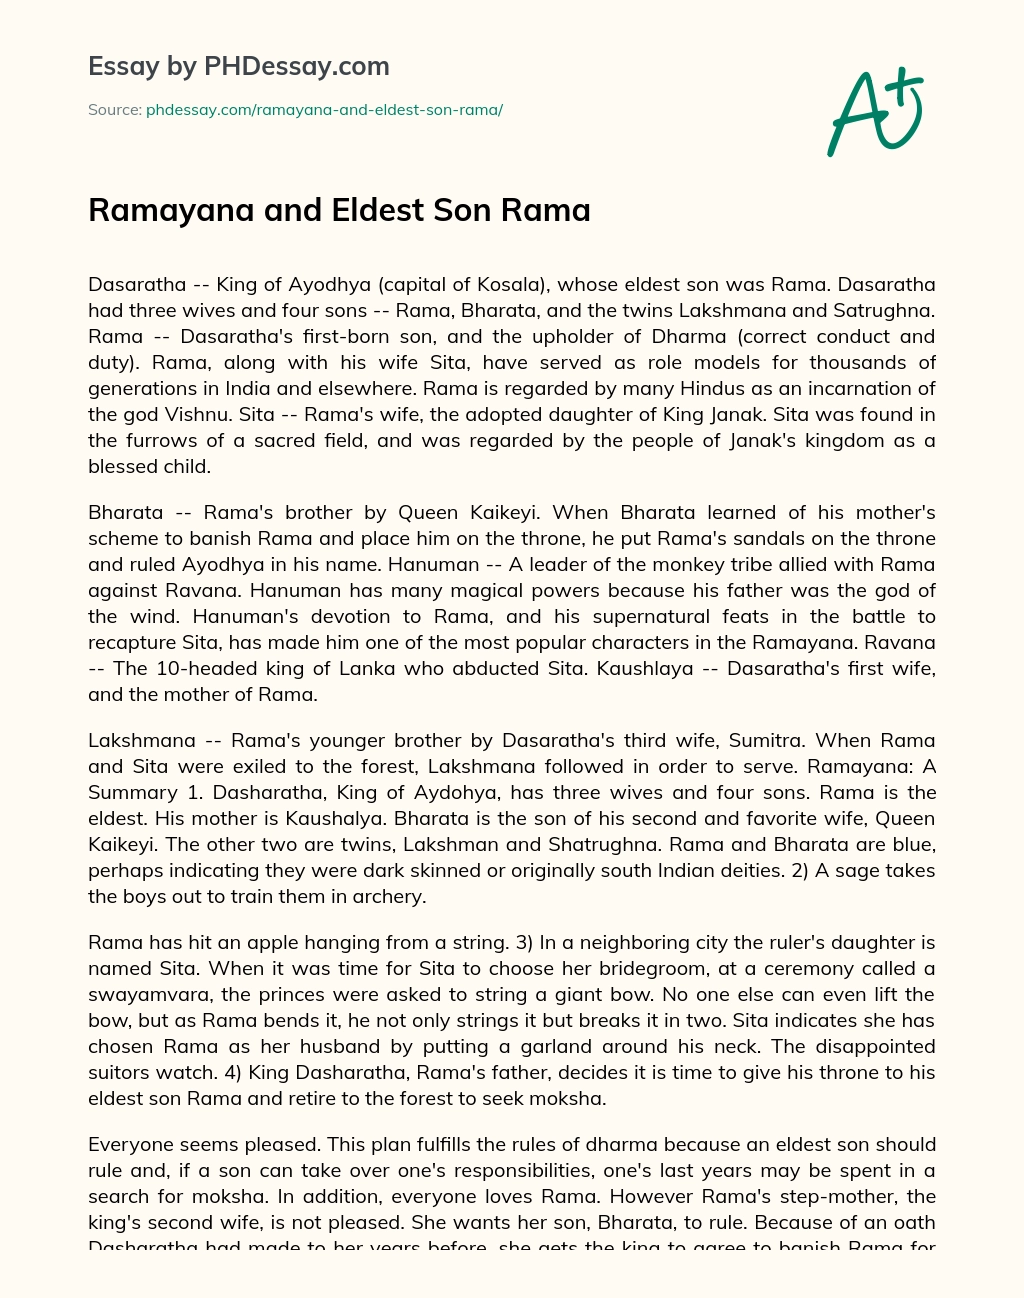 Ramayana and Eldest Son Rama essay